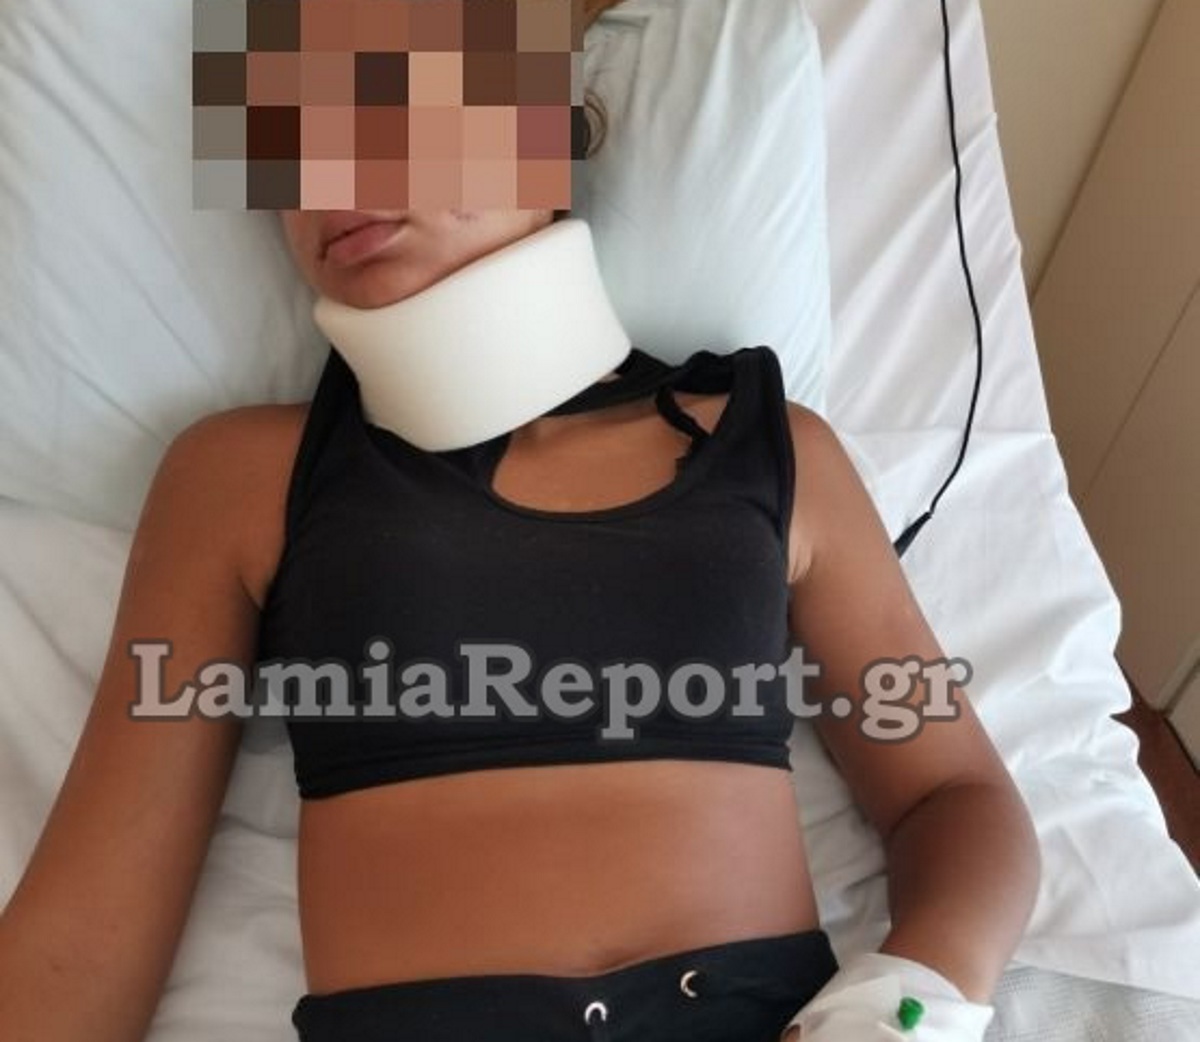 H αδελφή της 13χρονης που ξυλοκόπησαν άγρια στη Λαμία, στο ΤLIFE: “Τη δάγκωσαν στο πρόσωπο! Είναι σε σοκ”